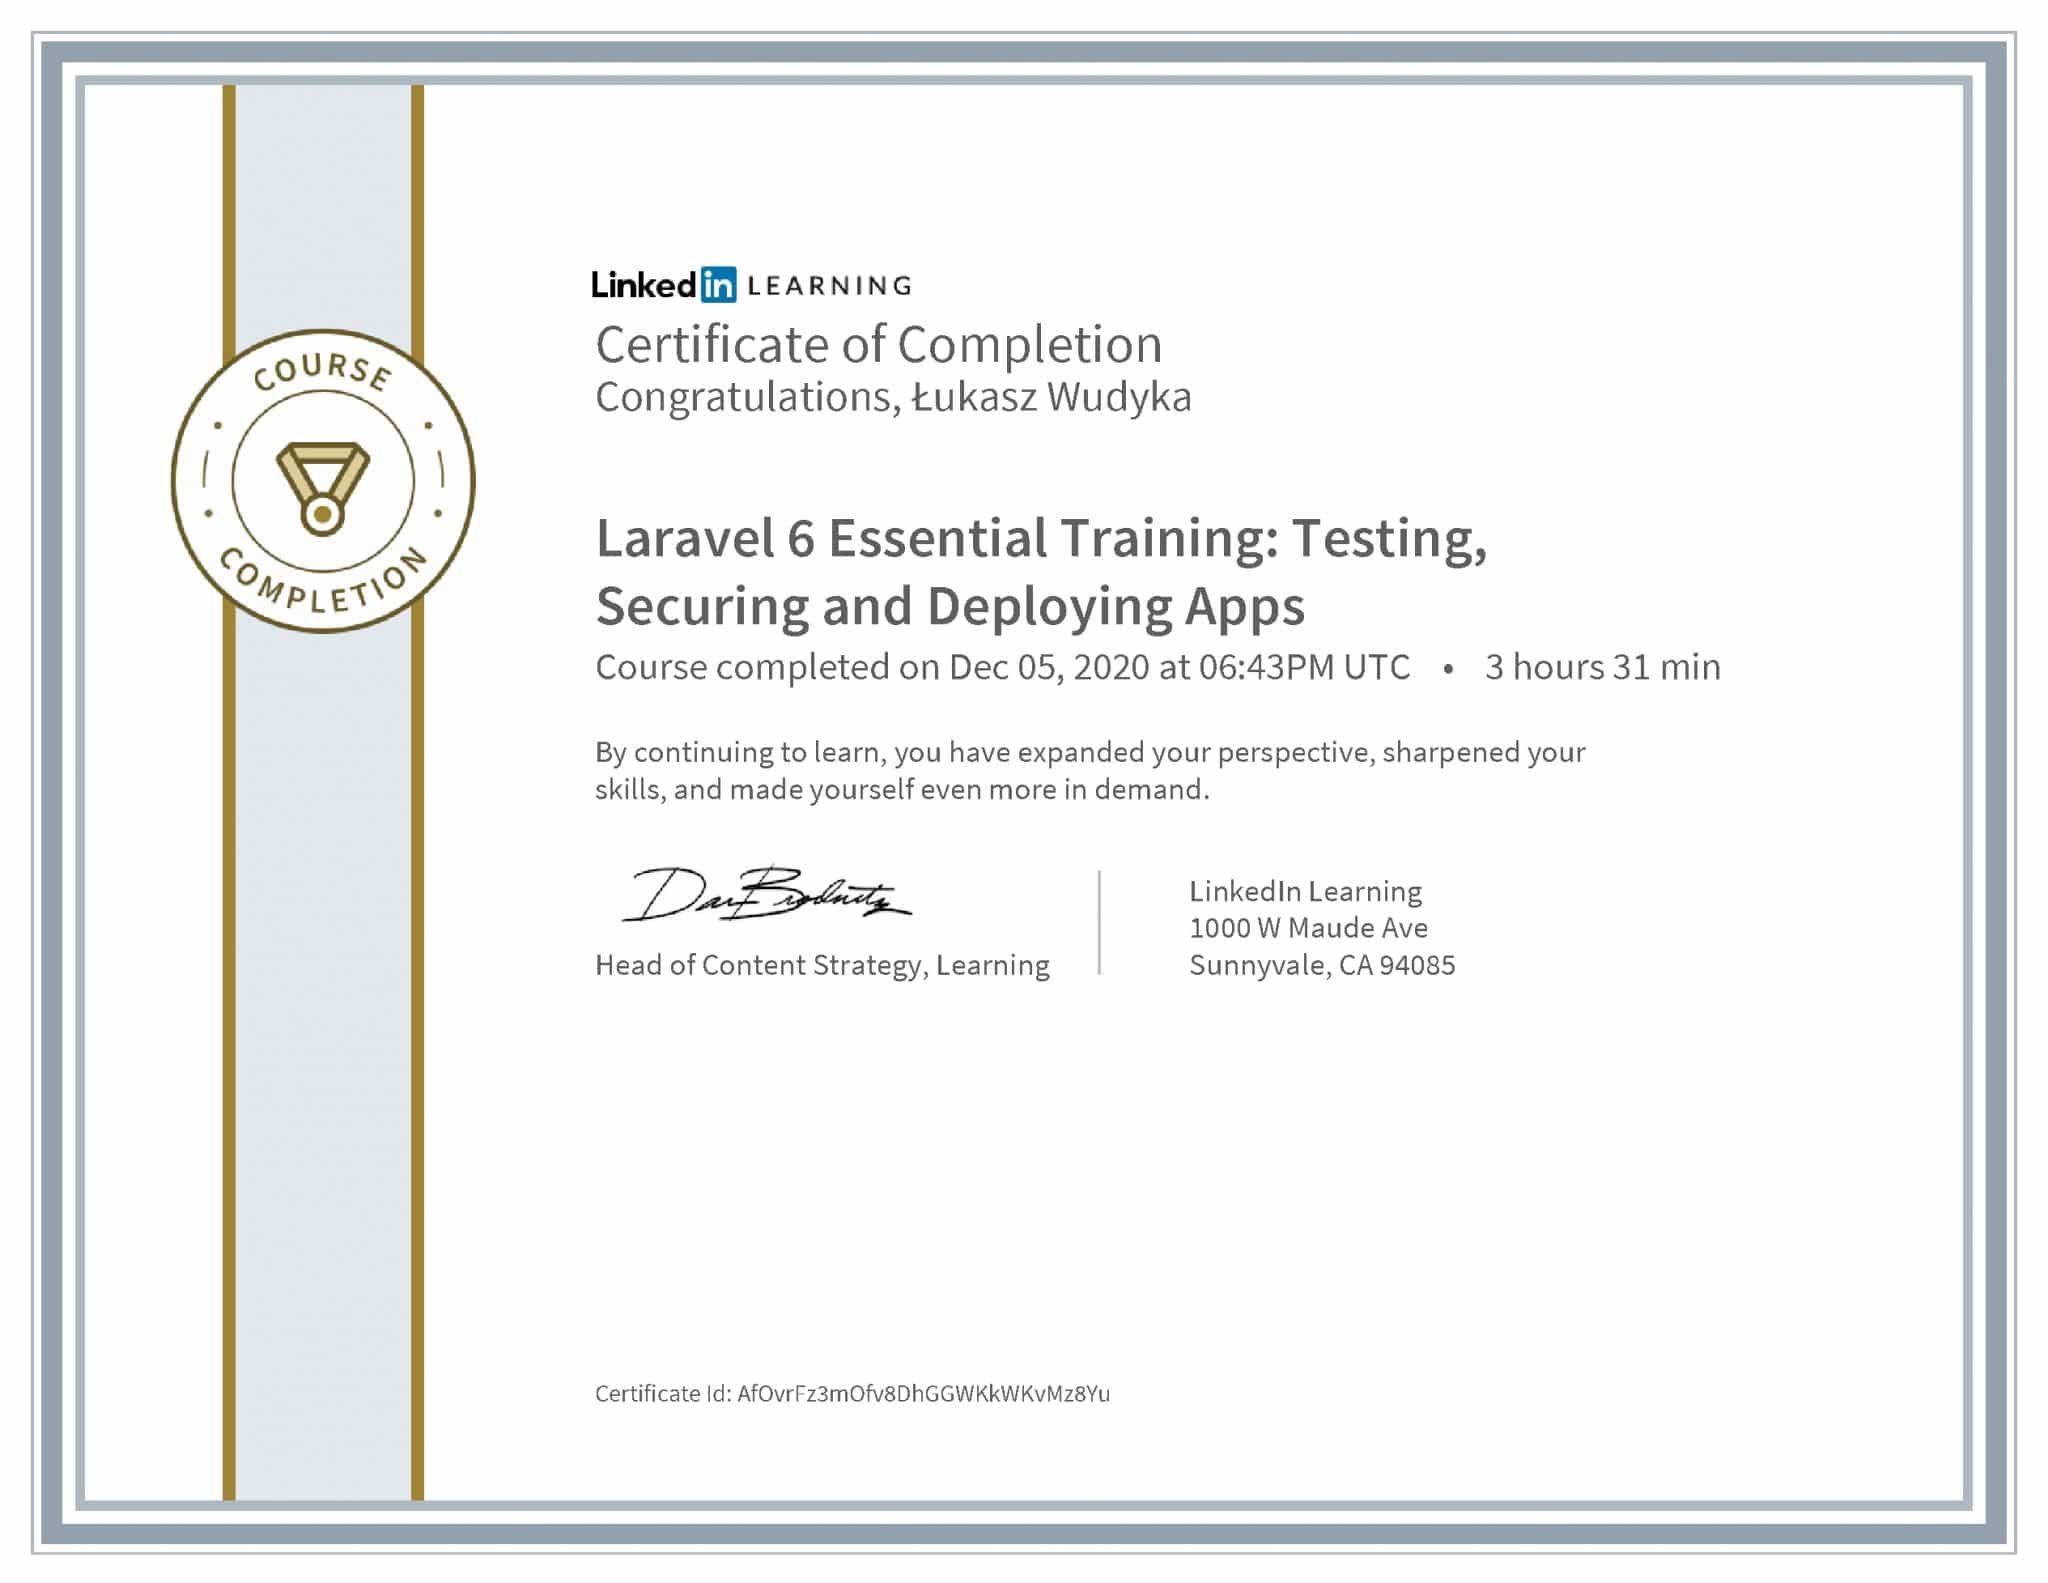 Łukasz Wudyka certyfikat LinkedIn Laravel 6 Essential Training: Testing, Securing and Deploying Apps